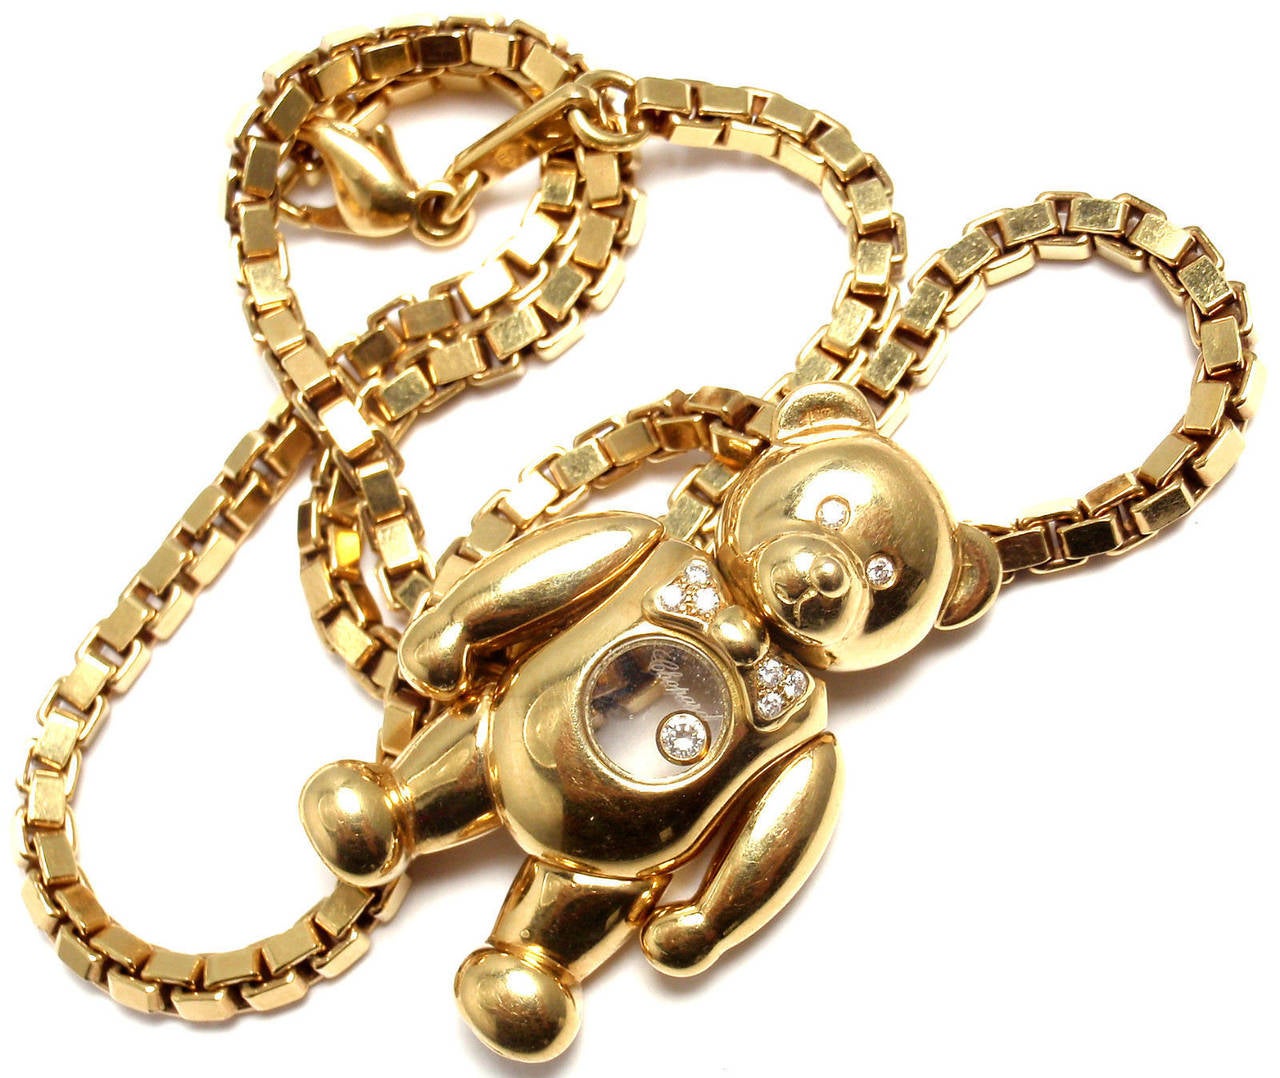 chopard teddy bear necklace